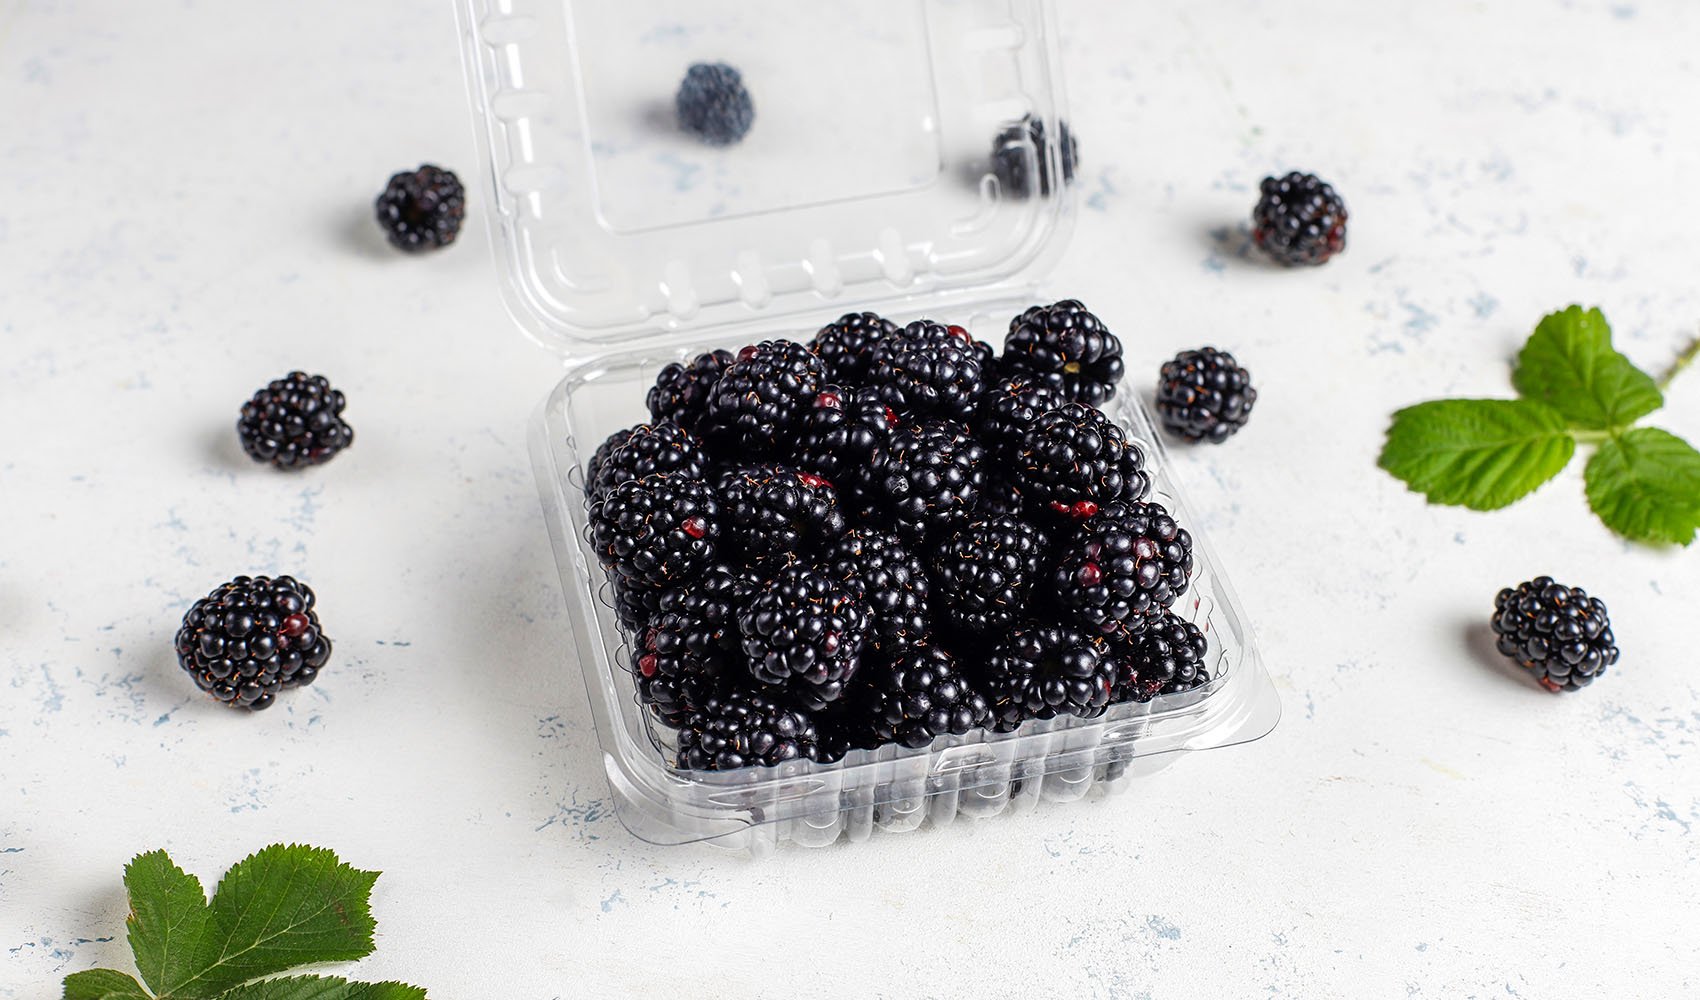 nutritional-comparison-blueberries-vs-blackberries-3